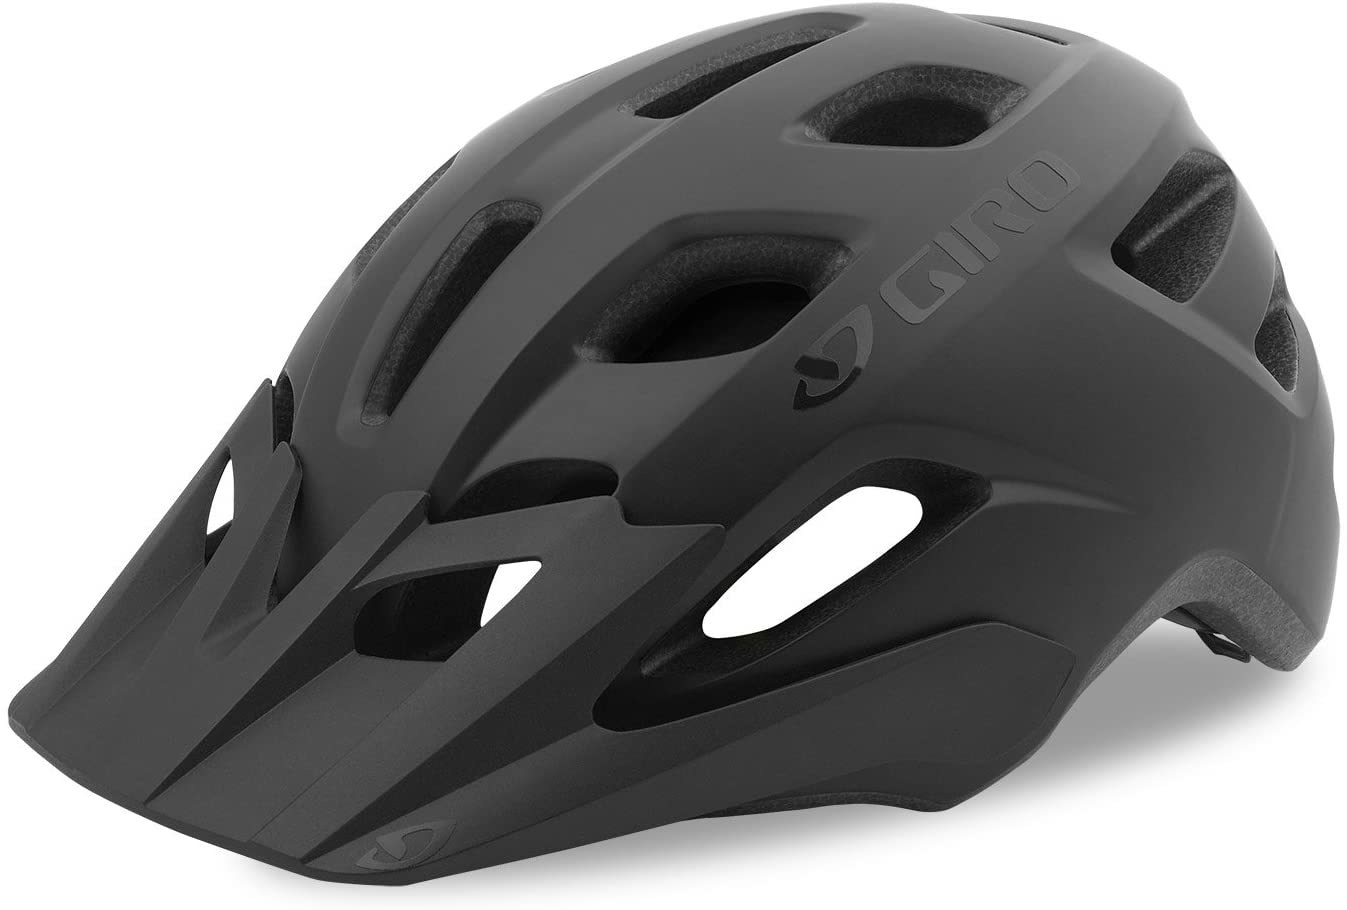 The GIRO helmet with a removable visor 